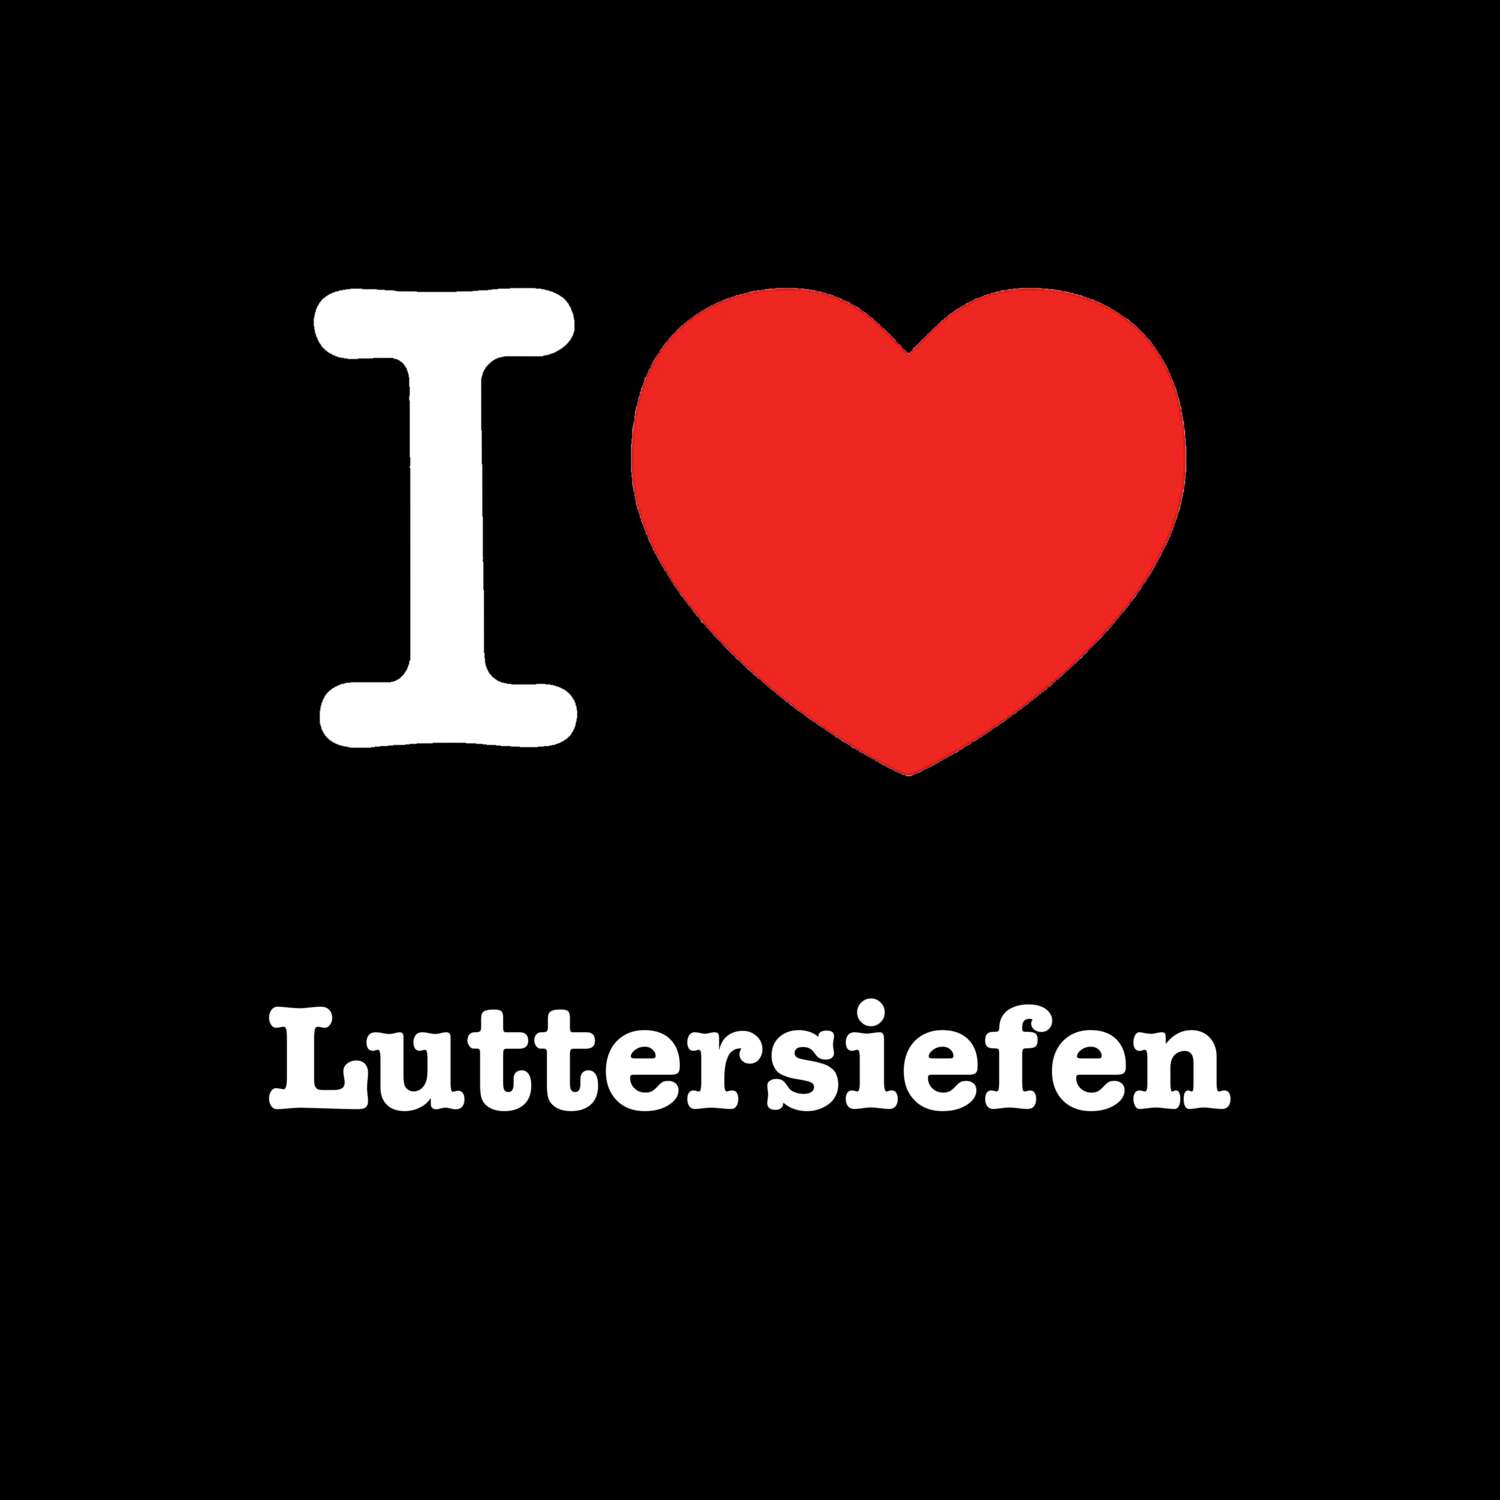 Luttersiefen T-Shirt »I love«